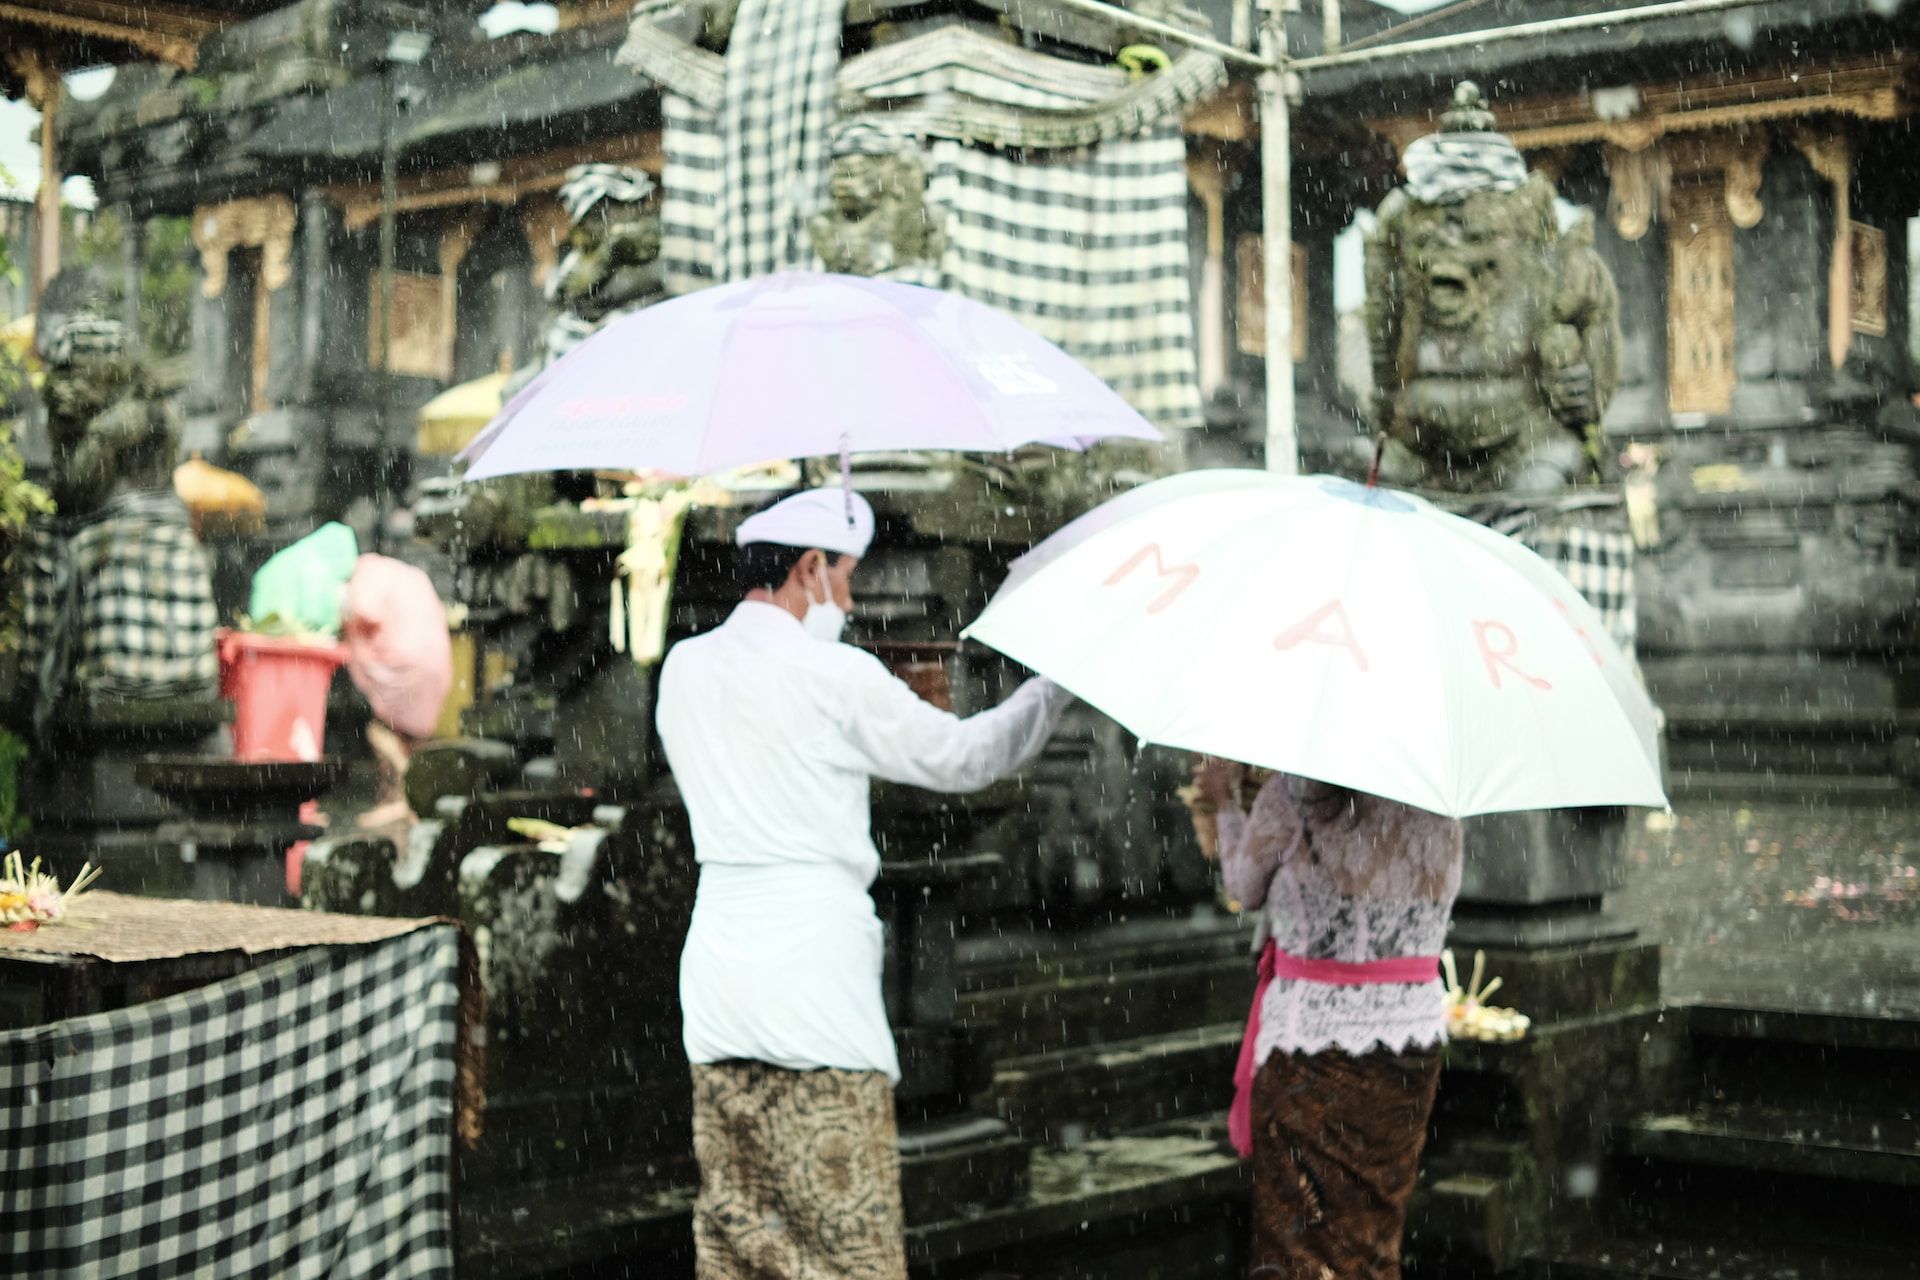 People standing with umbrellas in Bali rain